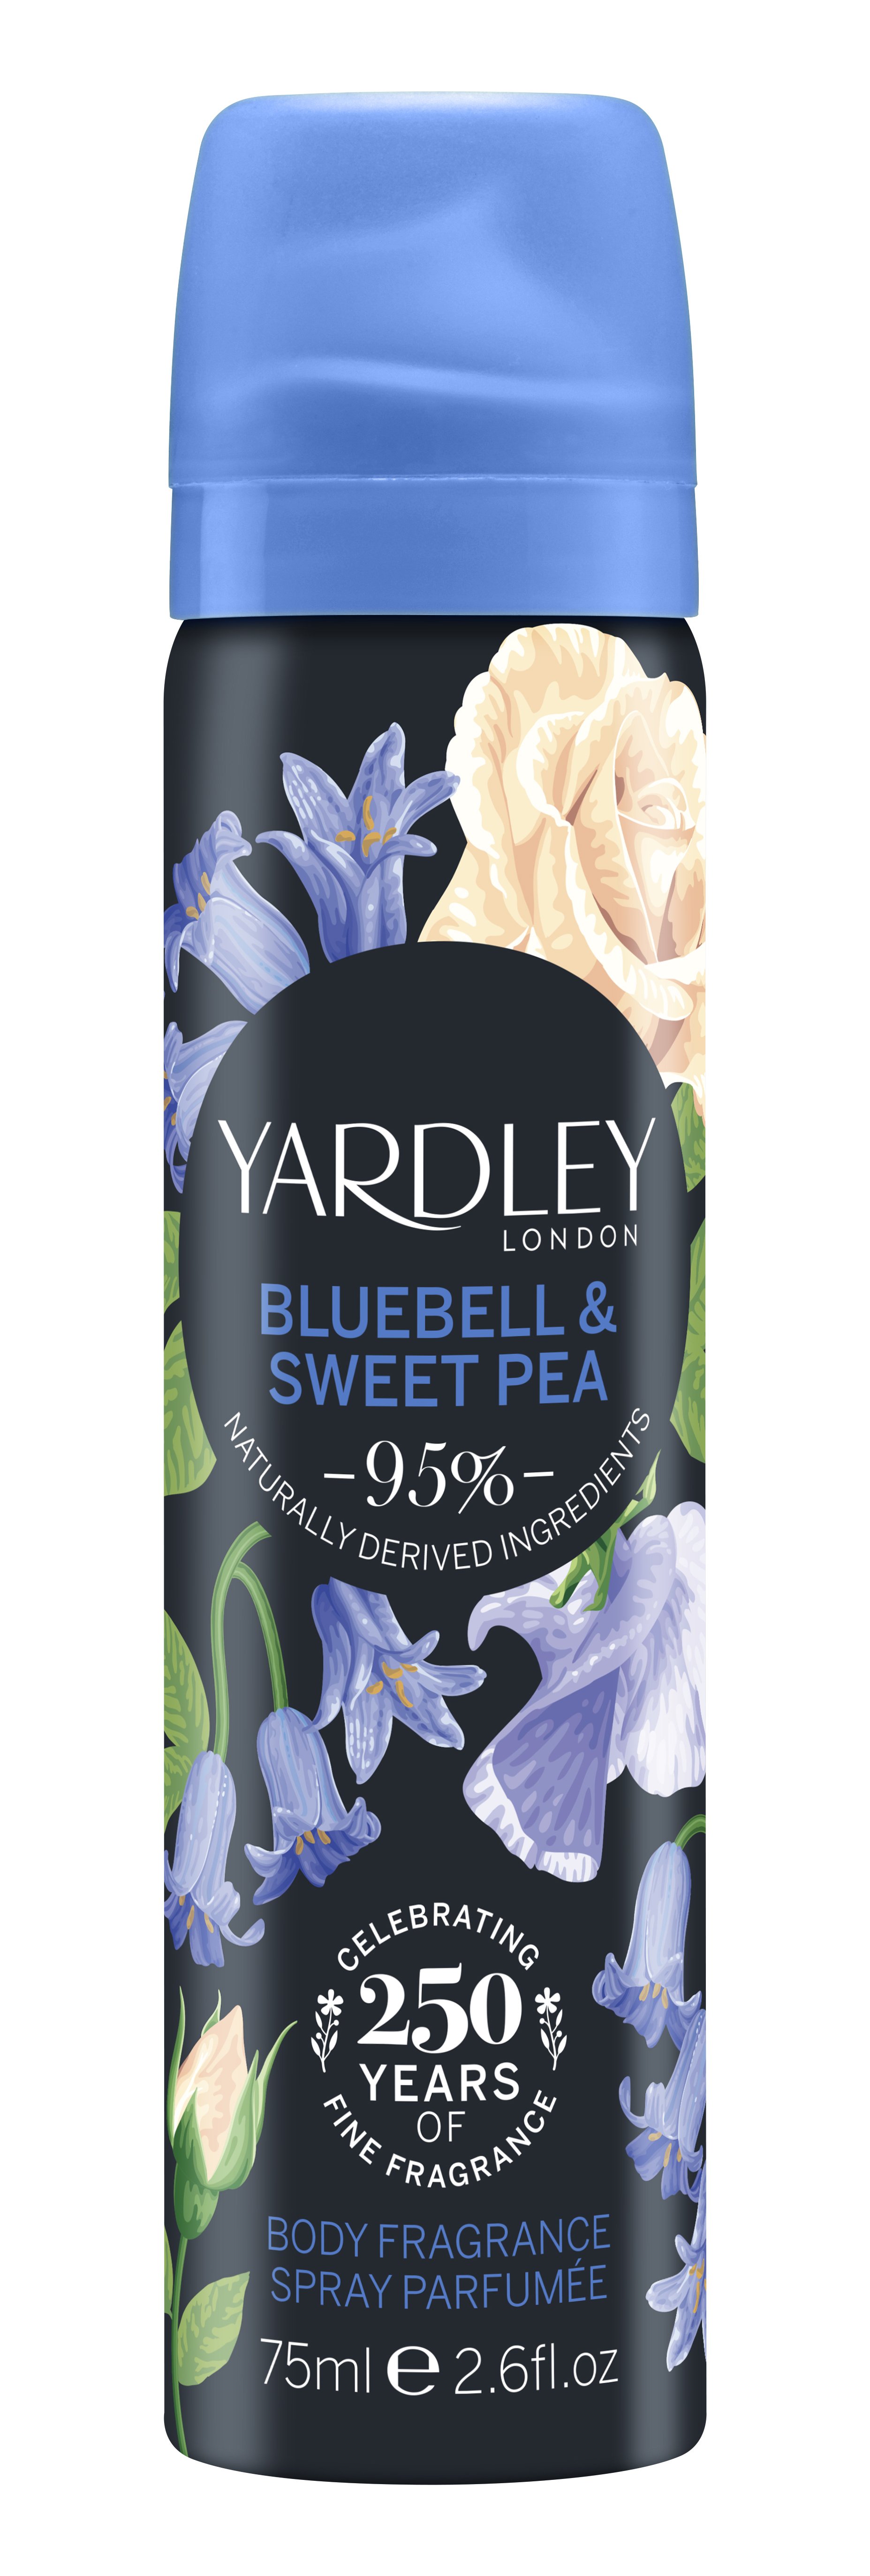 Yardley Bluebell And Sweet Pea 75ml Body Spray